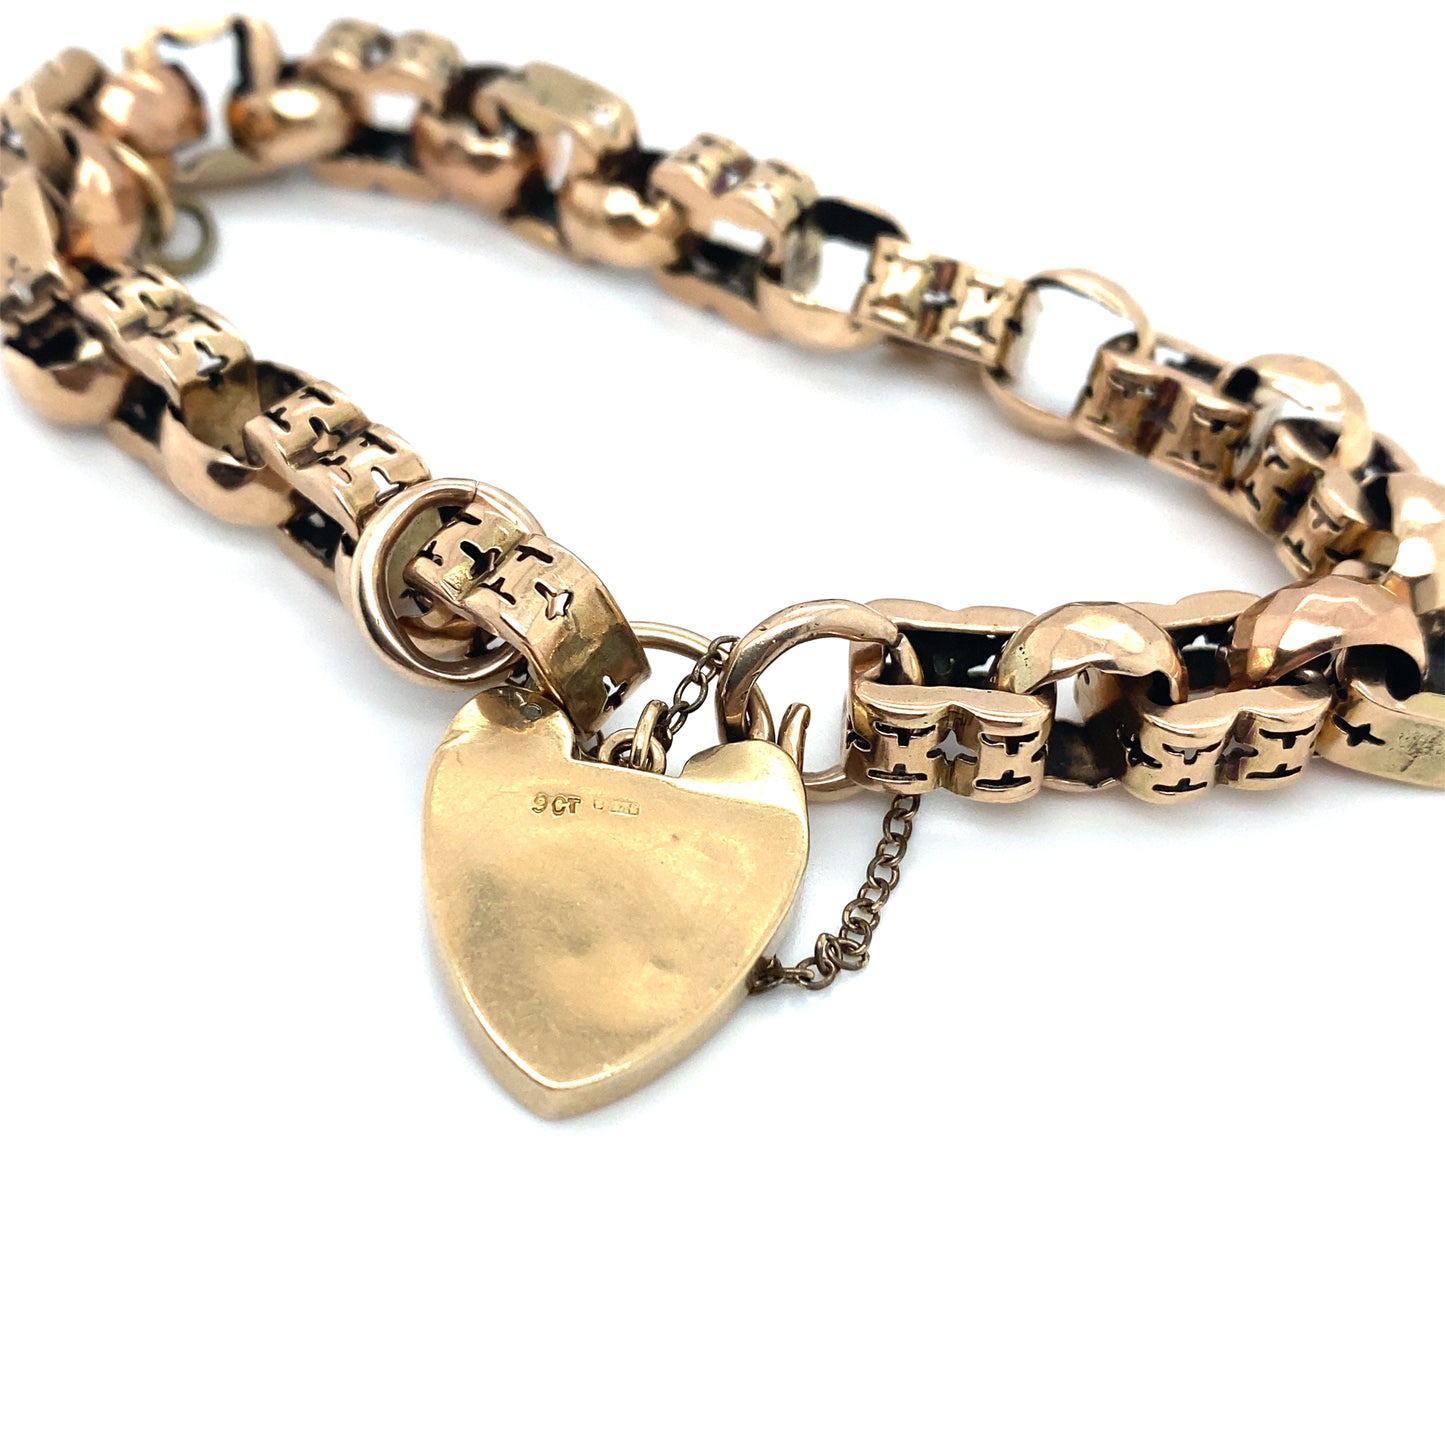 Edwardian Link Charm Bracelet with Heart Lock Charm in 9K Rose Gold